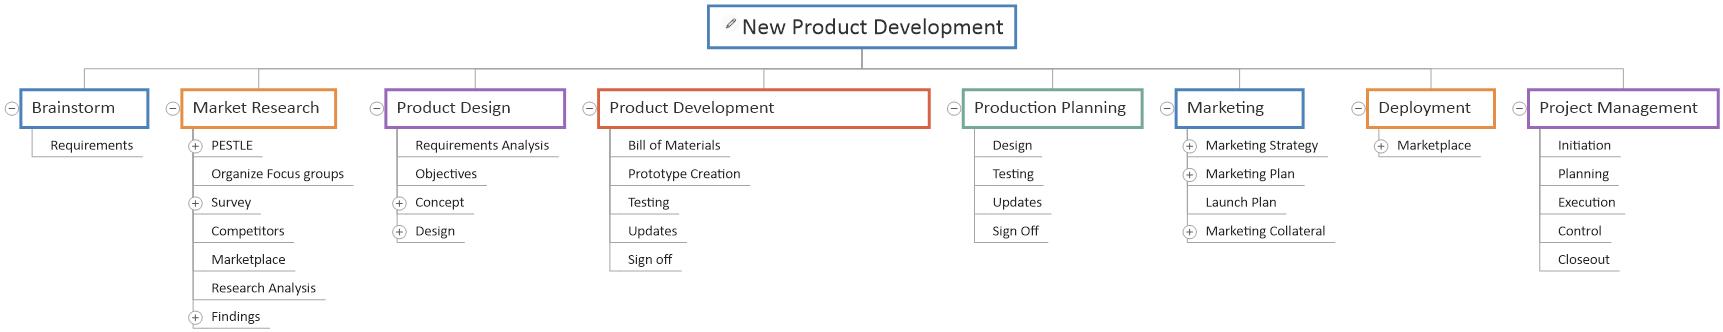 new product development mind map